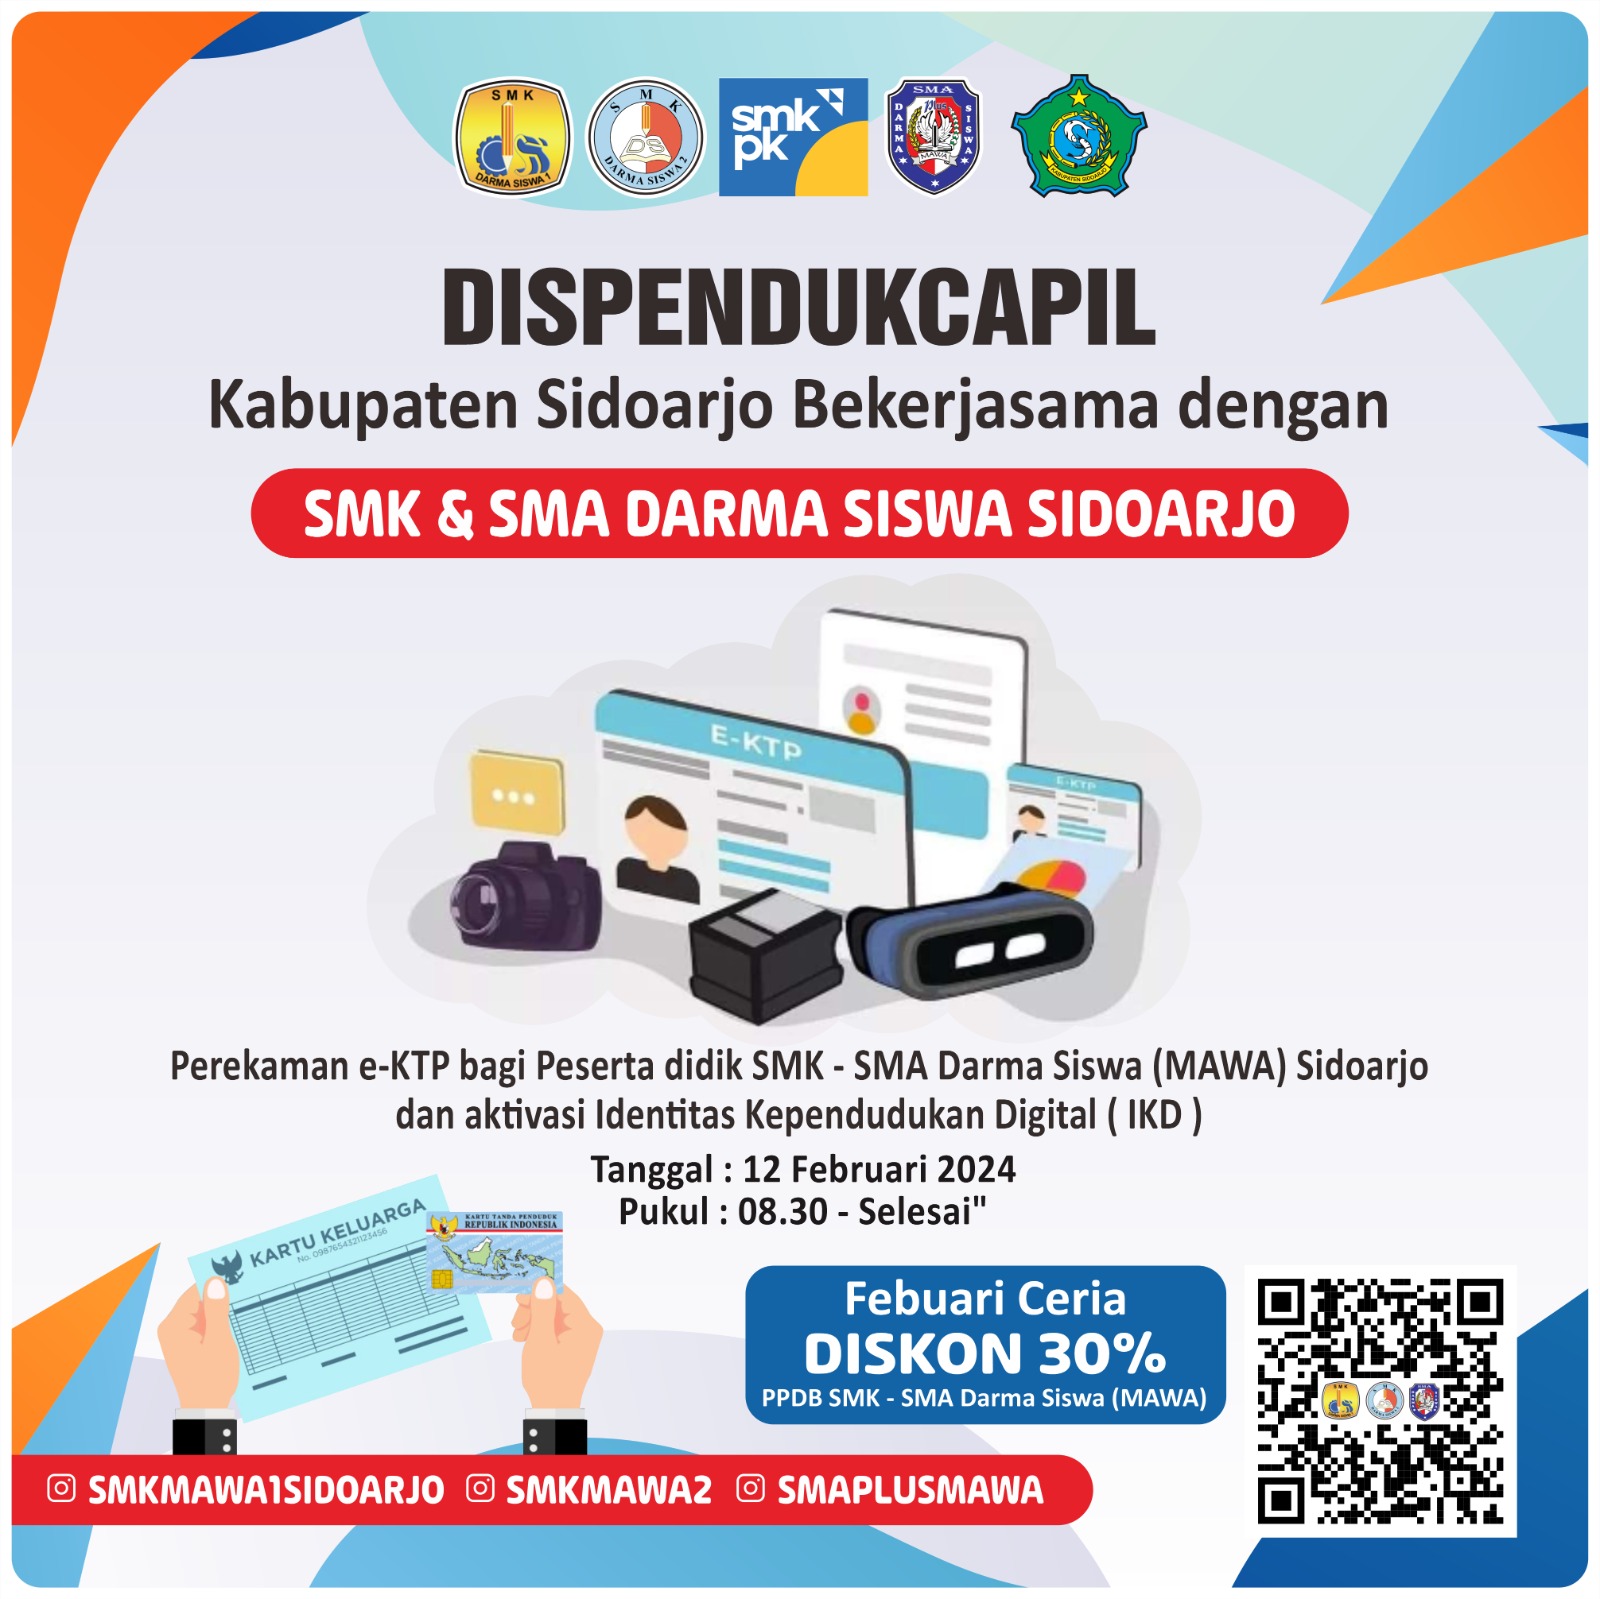 Dispendukcapil Bekerjasama Dengan SMK & SMA Plus Darma Siswa Sidoarjo Menyelenggarakan Perekaman e-KTP Bagi Peserta Didik